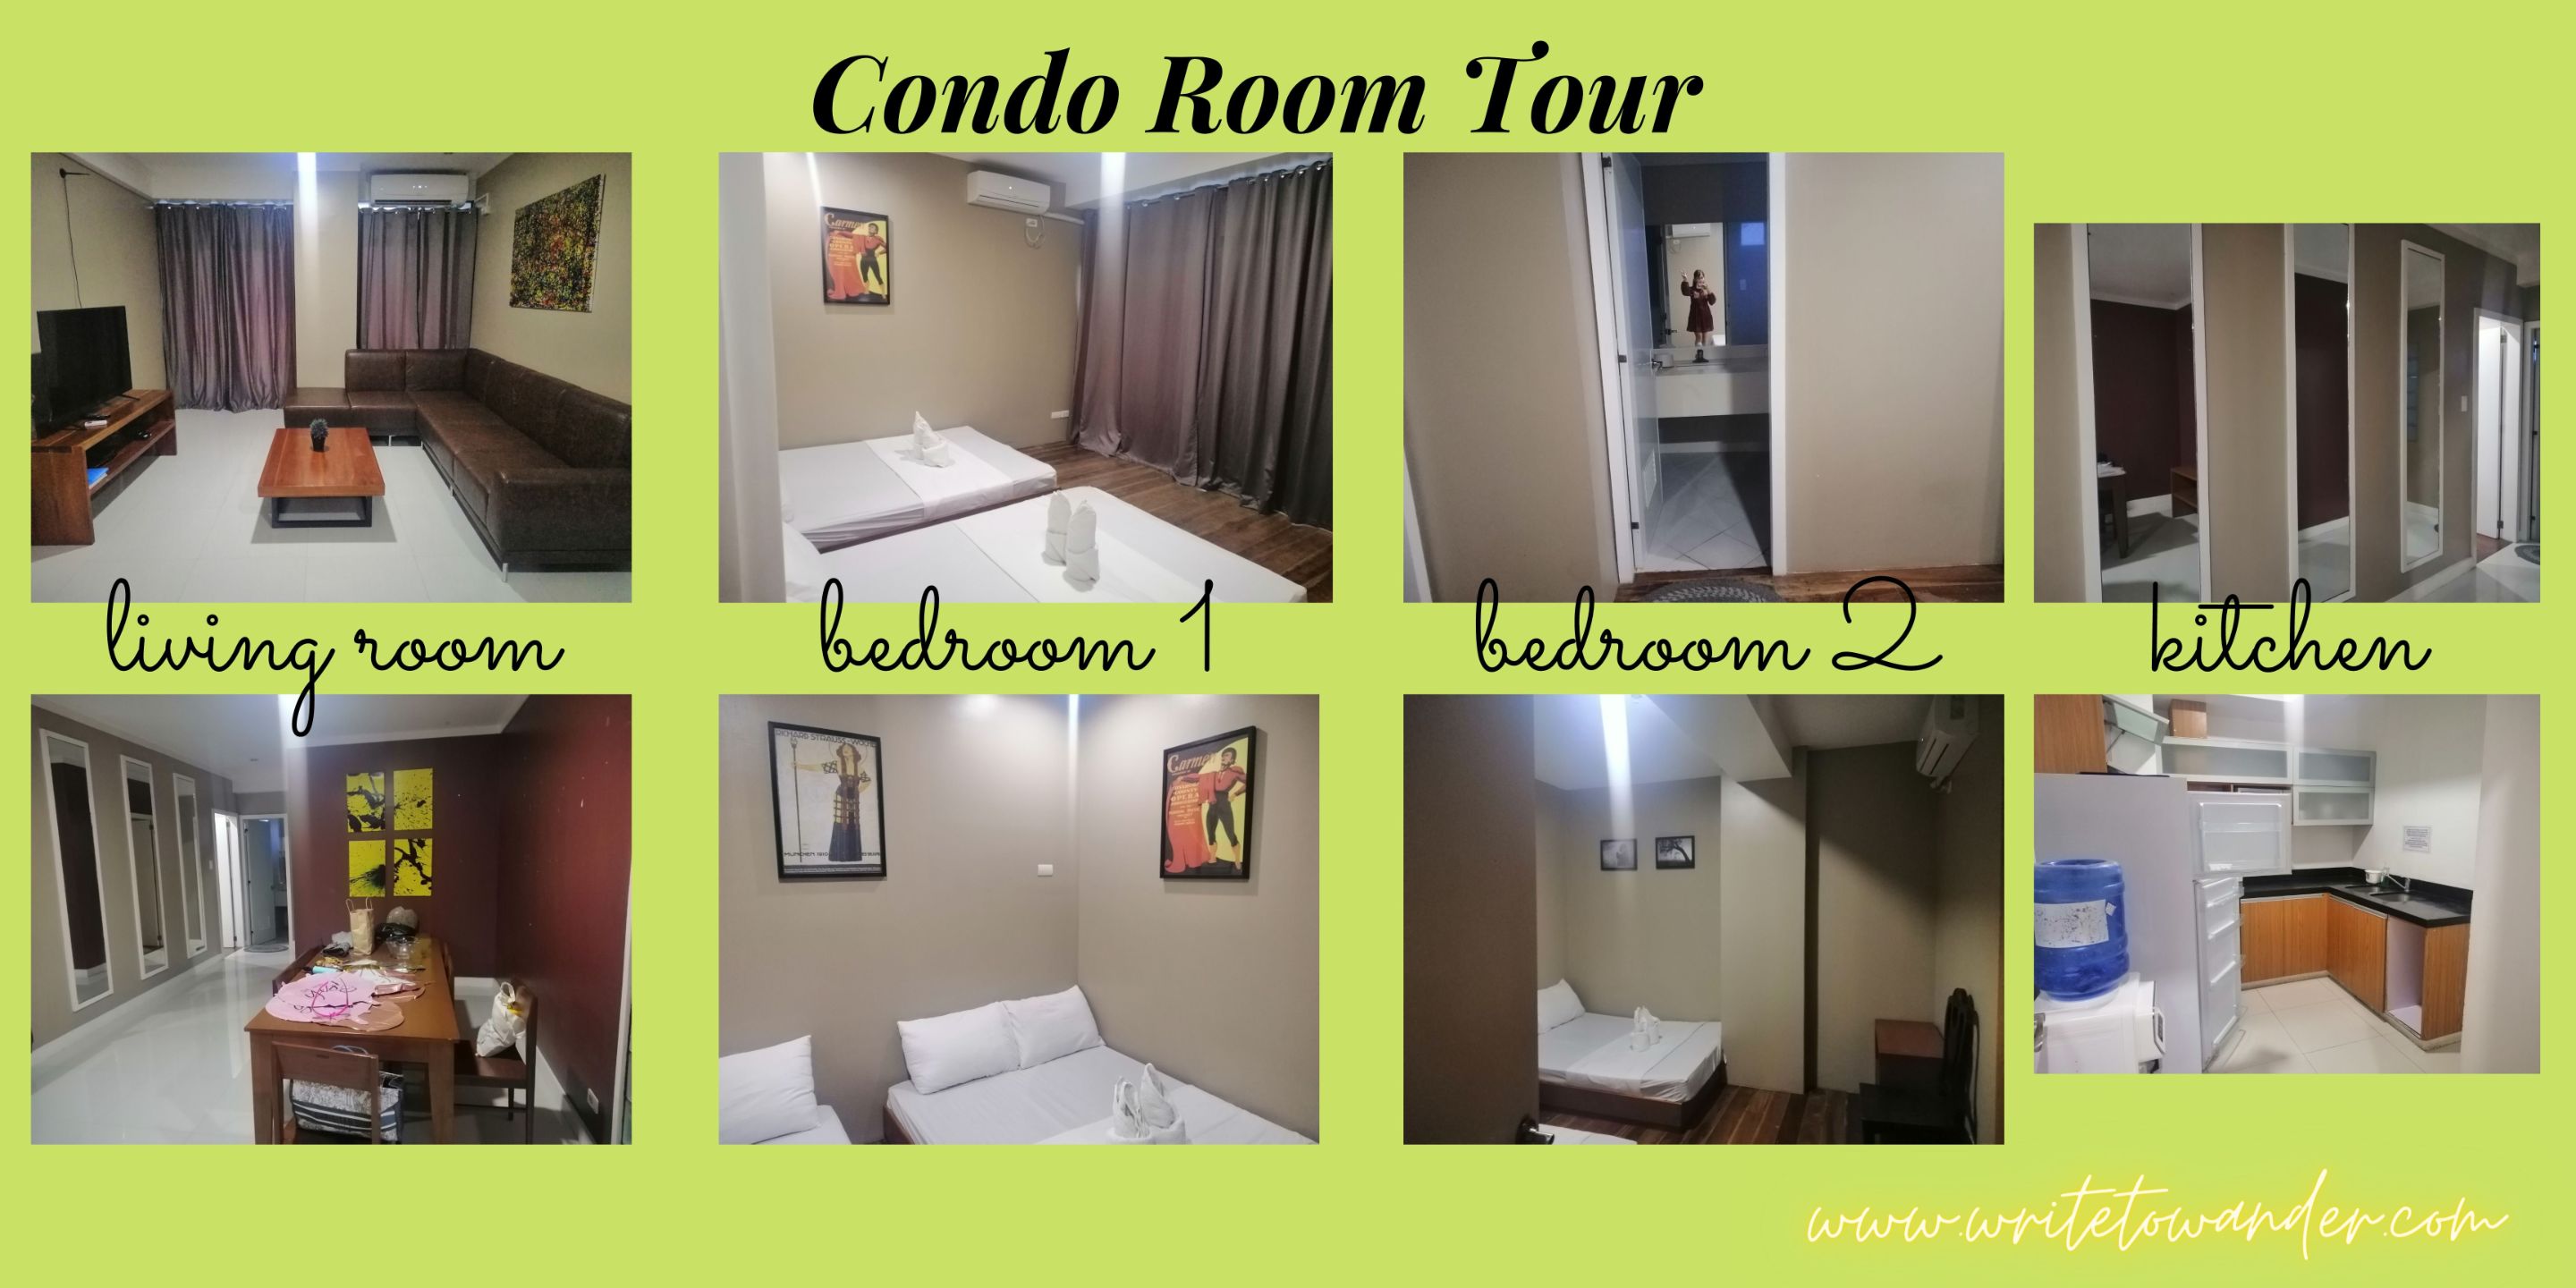 Condo Room Tour.jpg